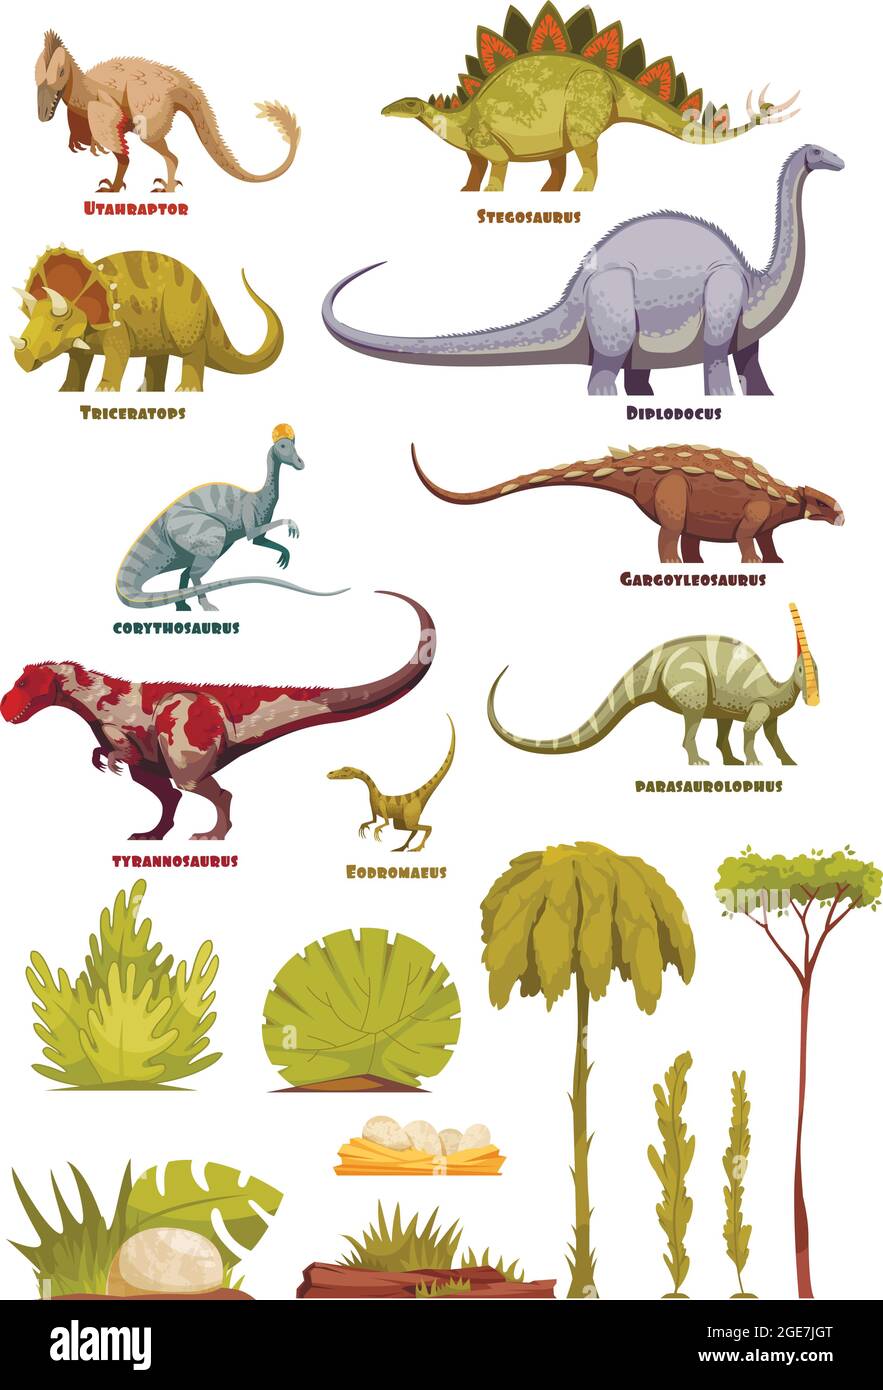 Tipos de dinosaurios fotografías e imágenes de alta resolución - Alamy